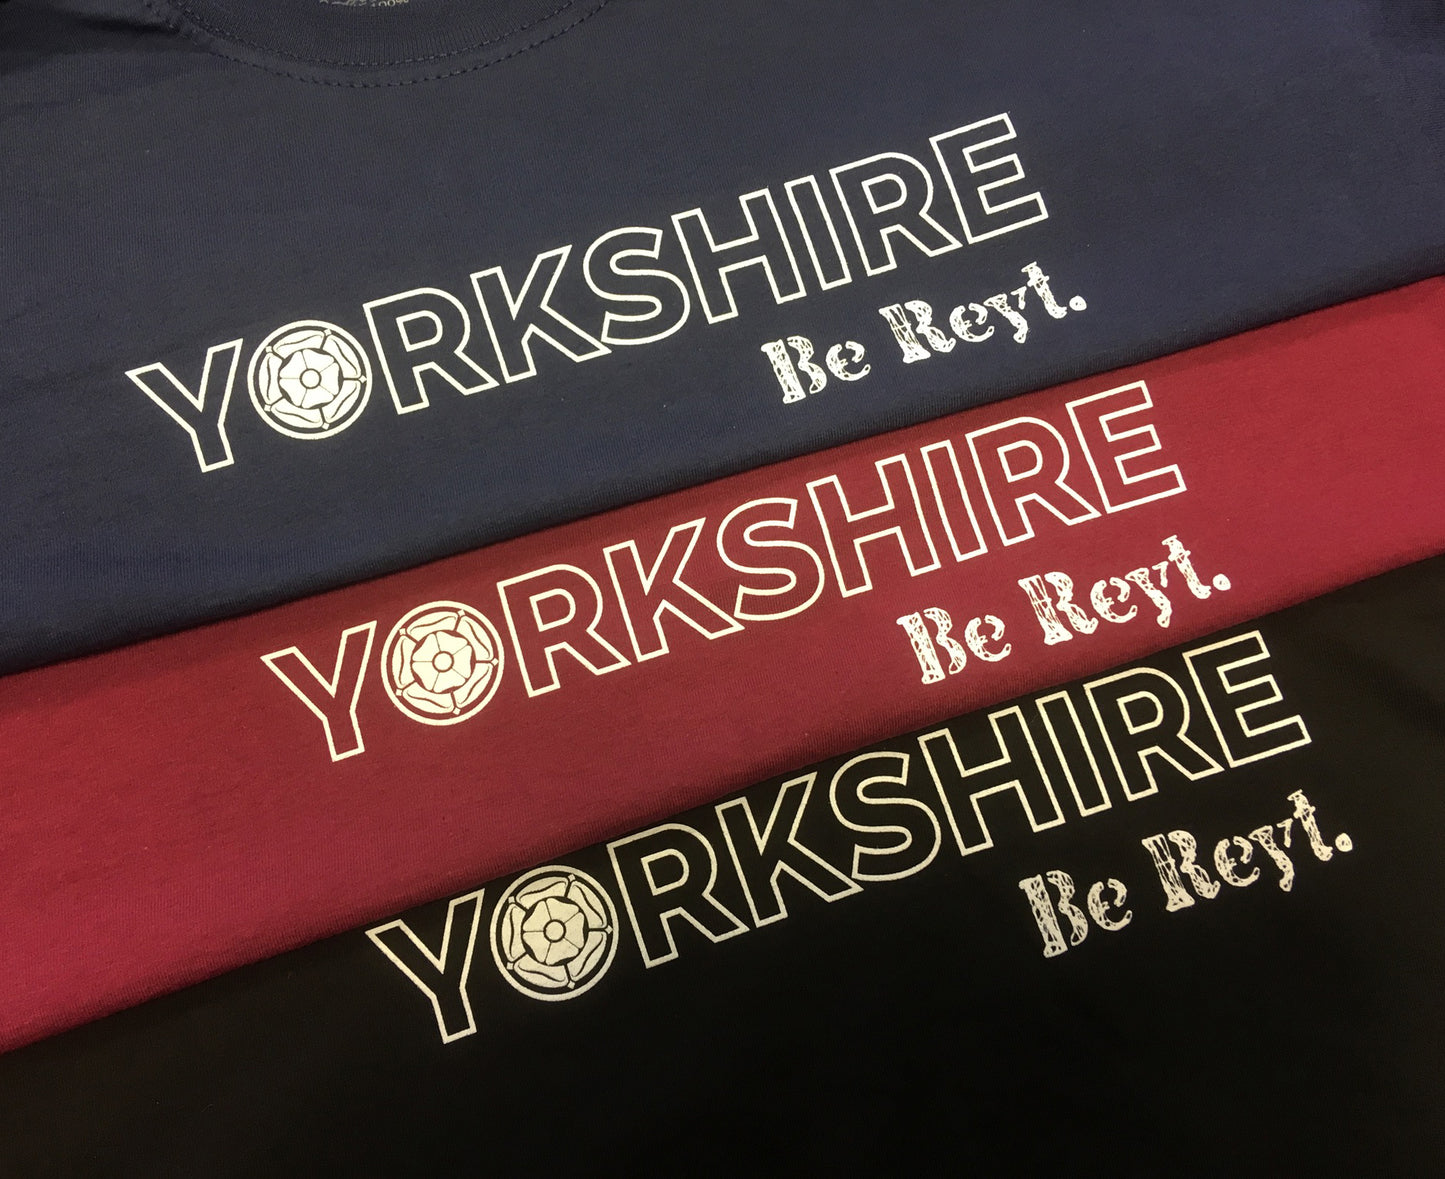 Yorkshire Stuff t-shirt, Yorkshire, be reyt.